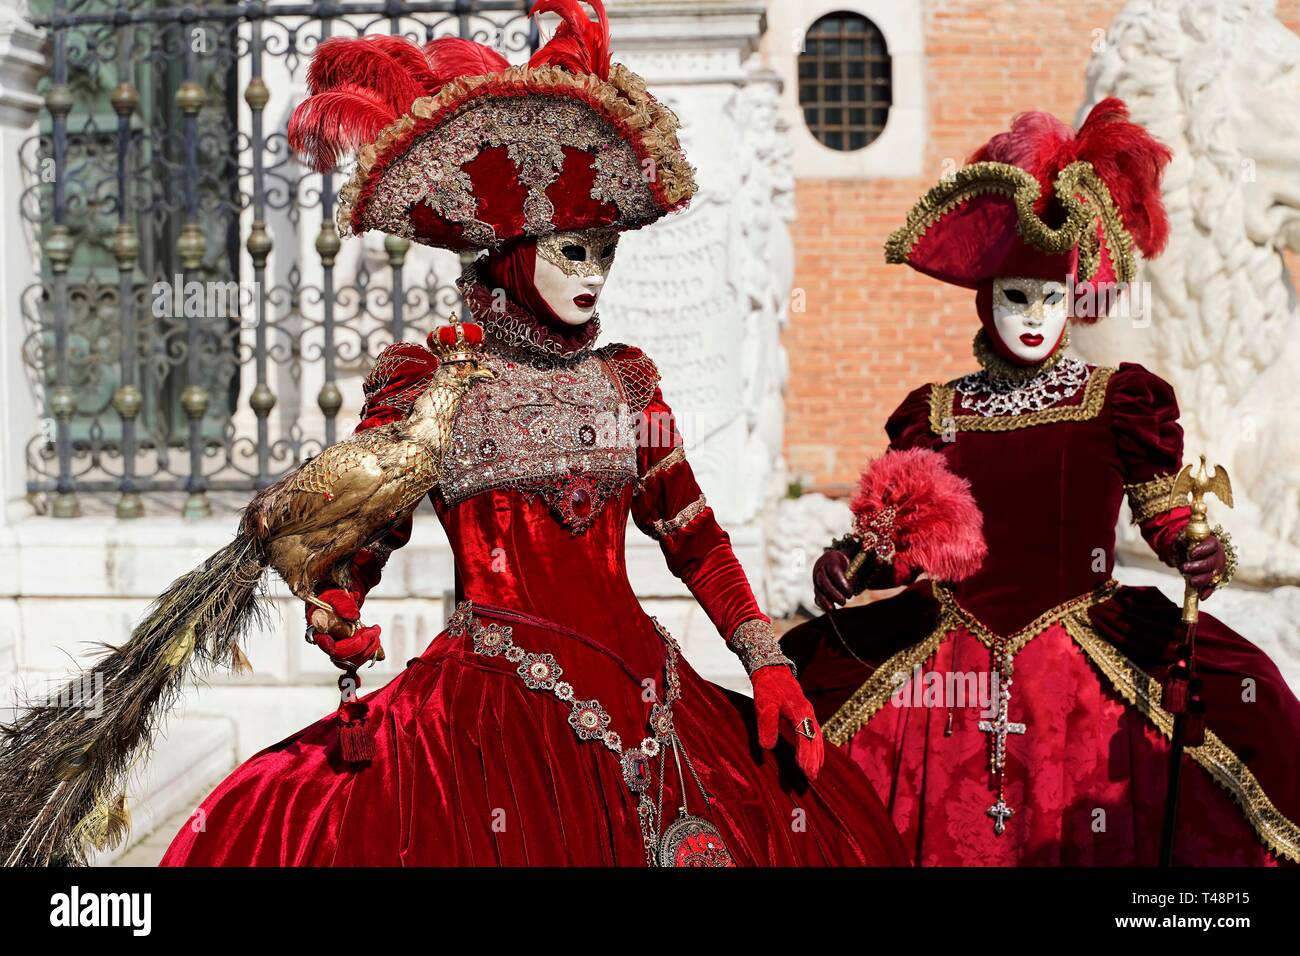 Donne in costume, tradizionali maschere veneziane, il carnevale di